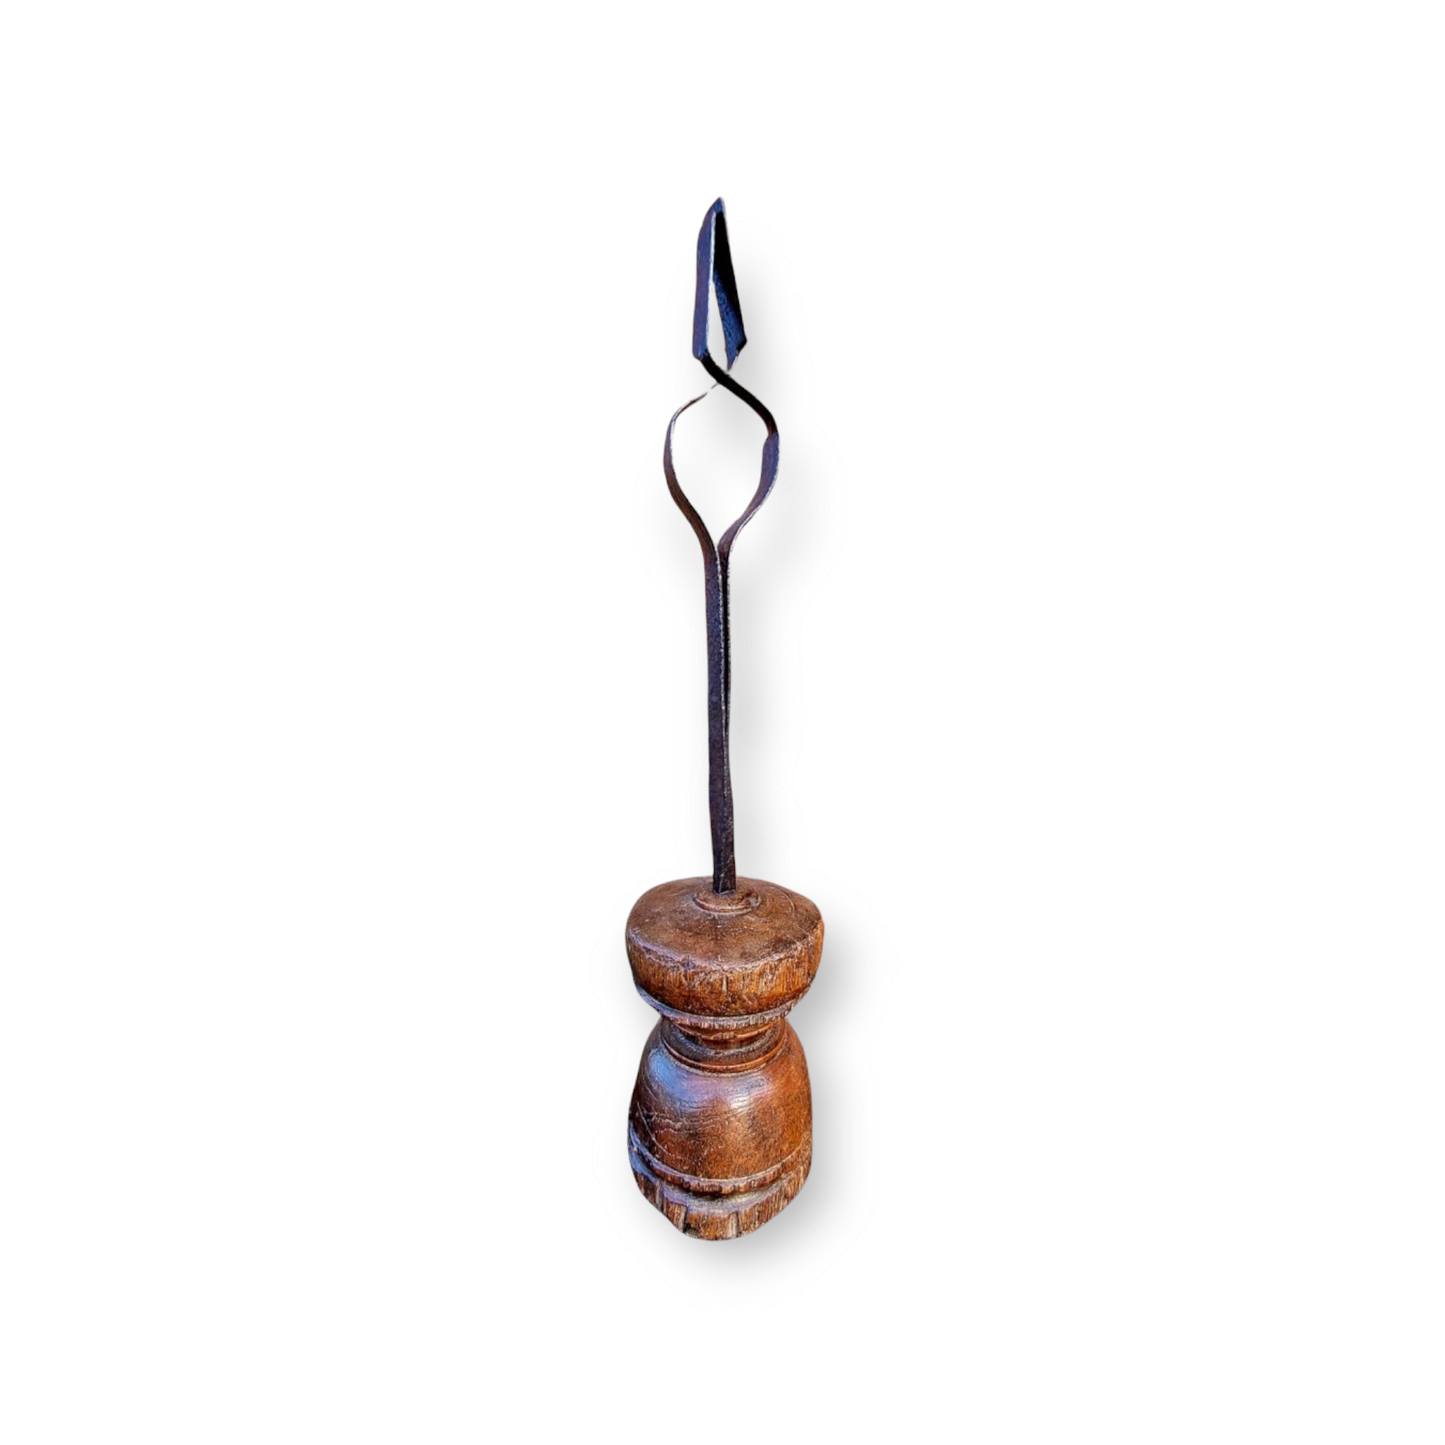 Late 18th Century English / Scottish Antique Wrought Iron Peerman (Iron Candlestick) on a Turned Wooden Base